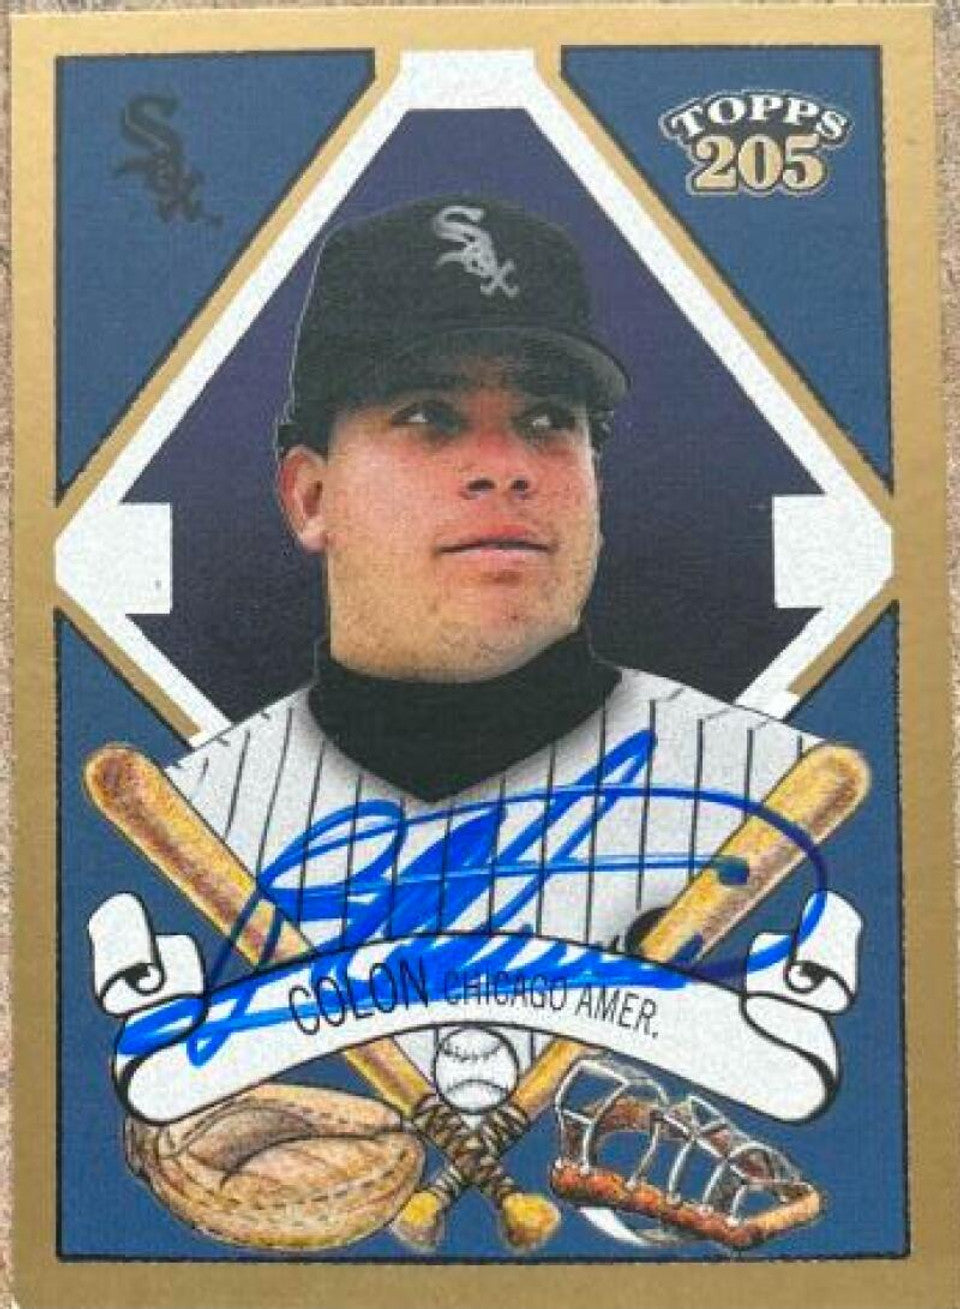 Bartolo Colon Signed 2003 Topps 205 Baseball Card - Chicago White Sox